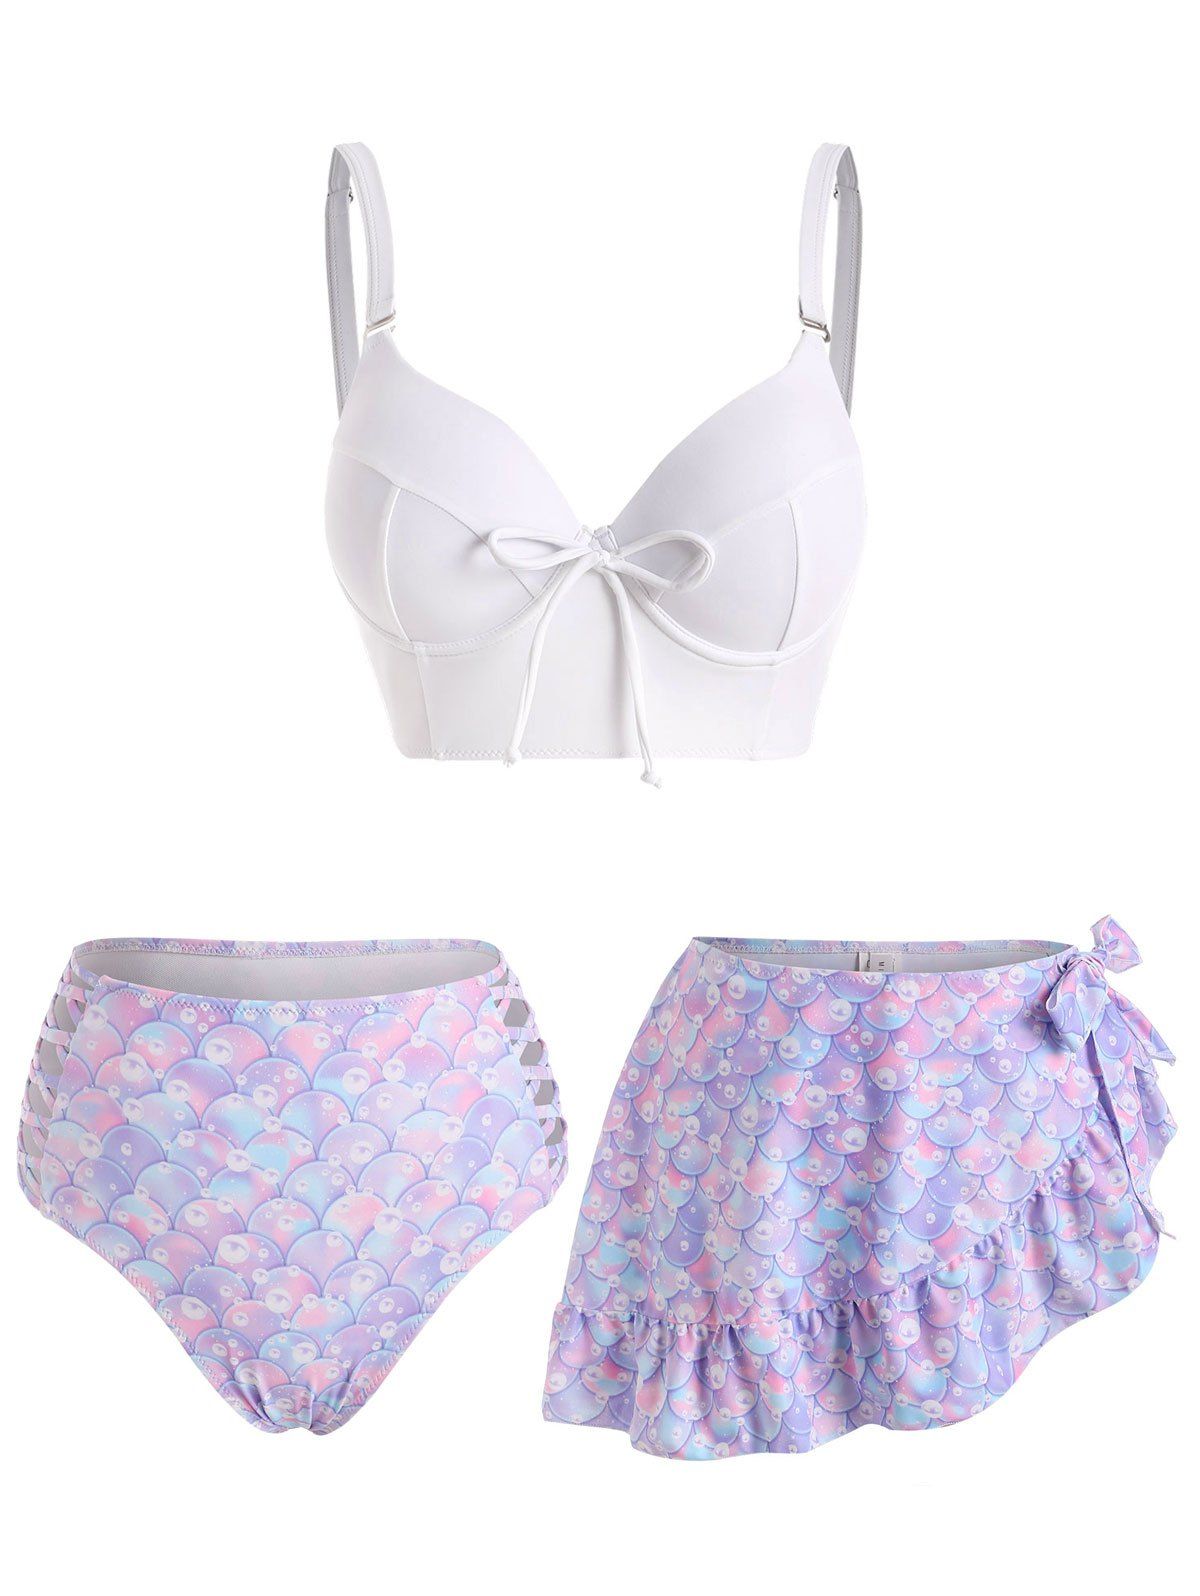 Mermaid Vacay Swimwear Criss Cross Bowknot Underwire Push Up Asymmetrical Hem Skirt Three Piece Tankini Swimwear - WHITE XXL